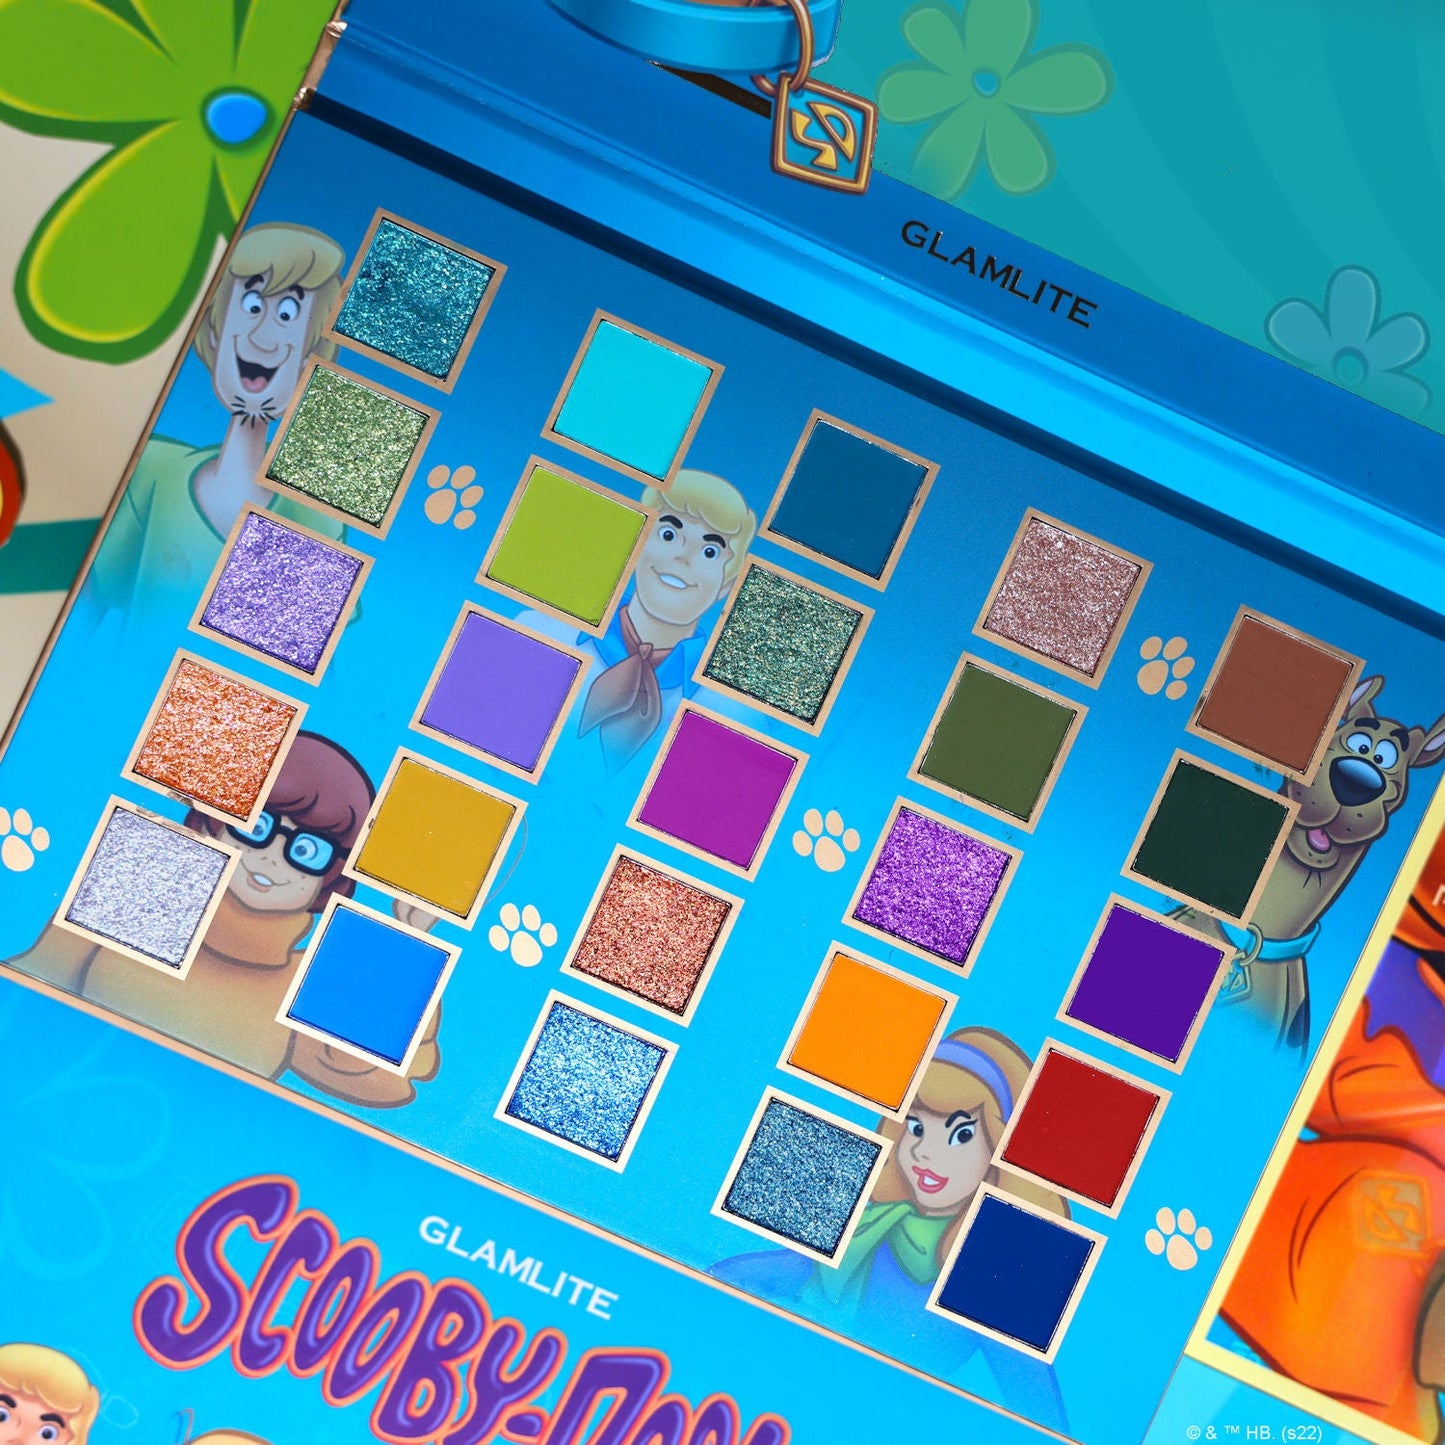 Scooby-Doo™ x Glamlite 25-colour eyeshadow palette